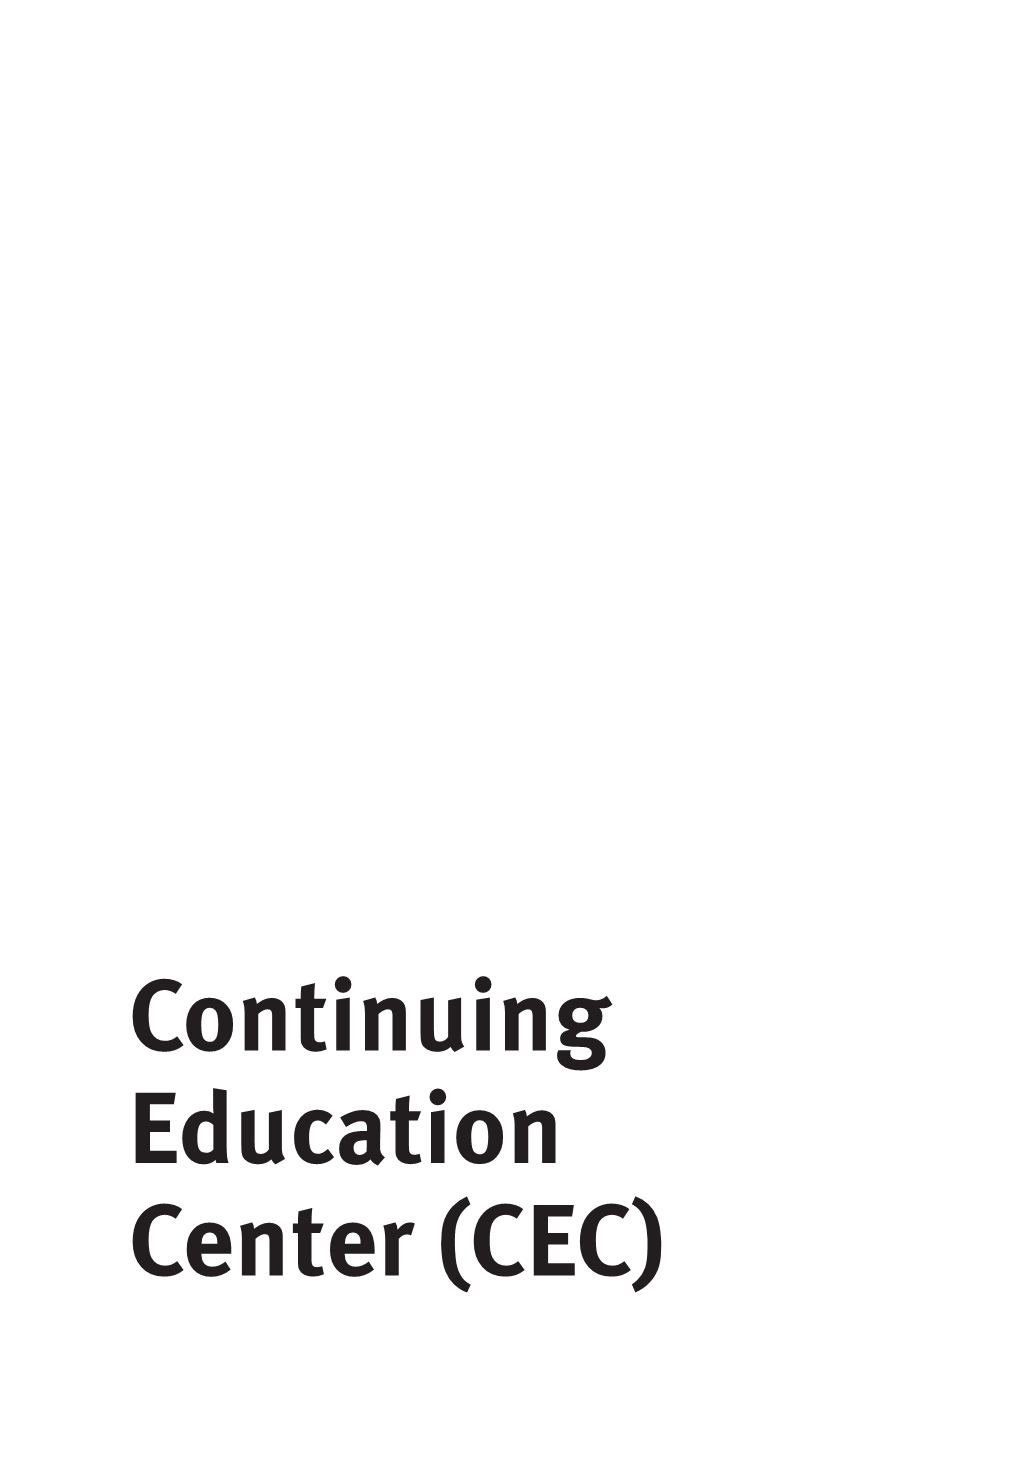 Continuing Education Center (CEC) 546 Continuing Education Center (CEC)